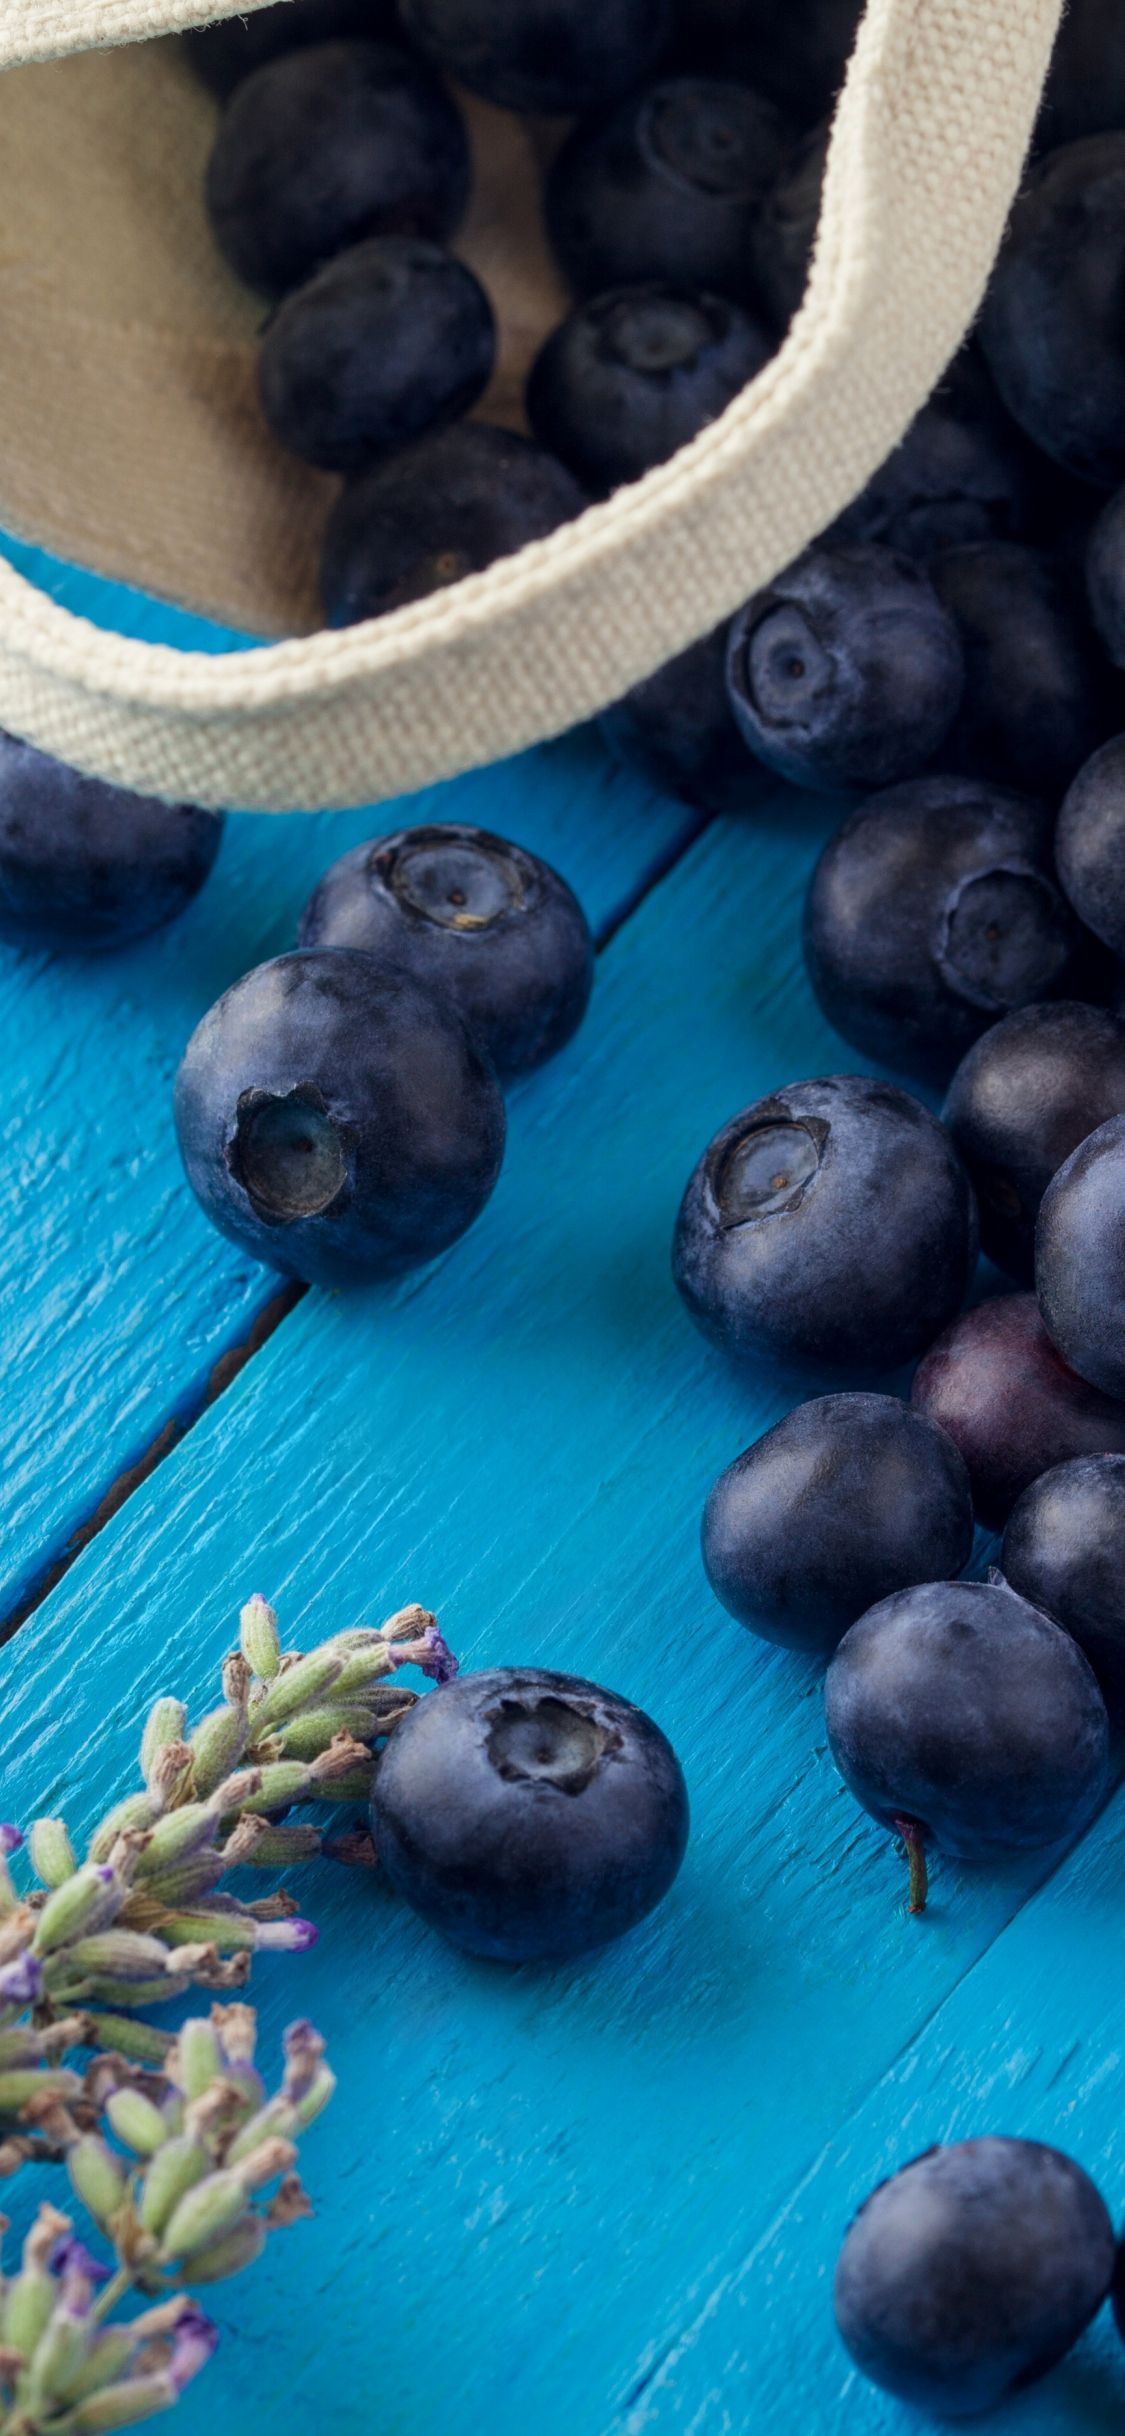 Download 1125x2436 wallpaper fresh, fruits, blueberries, berries